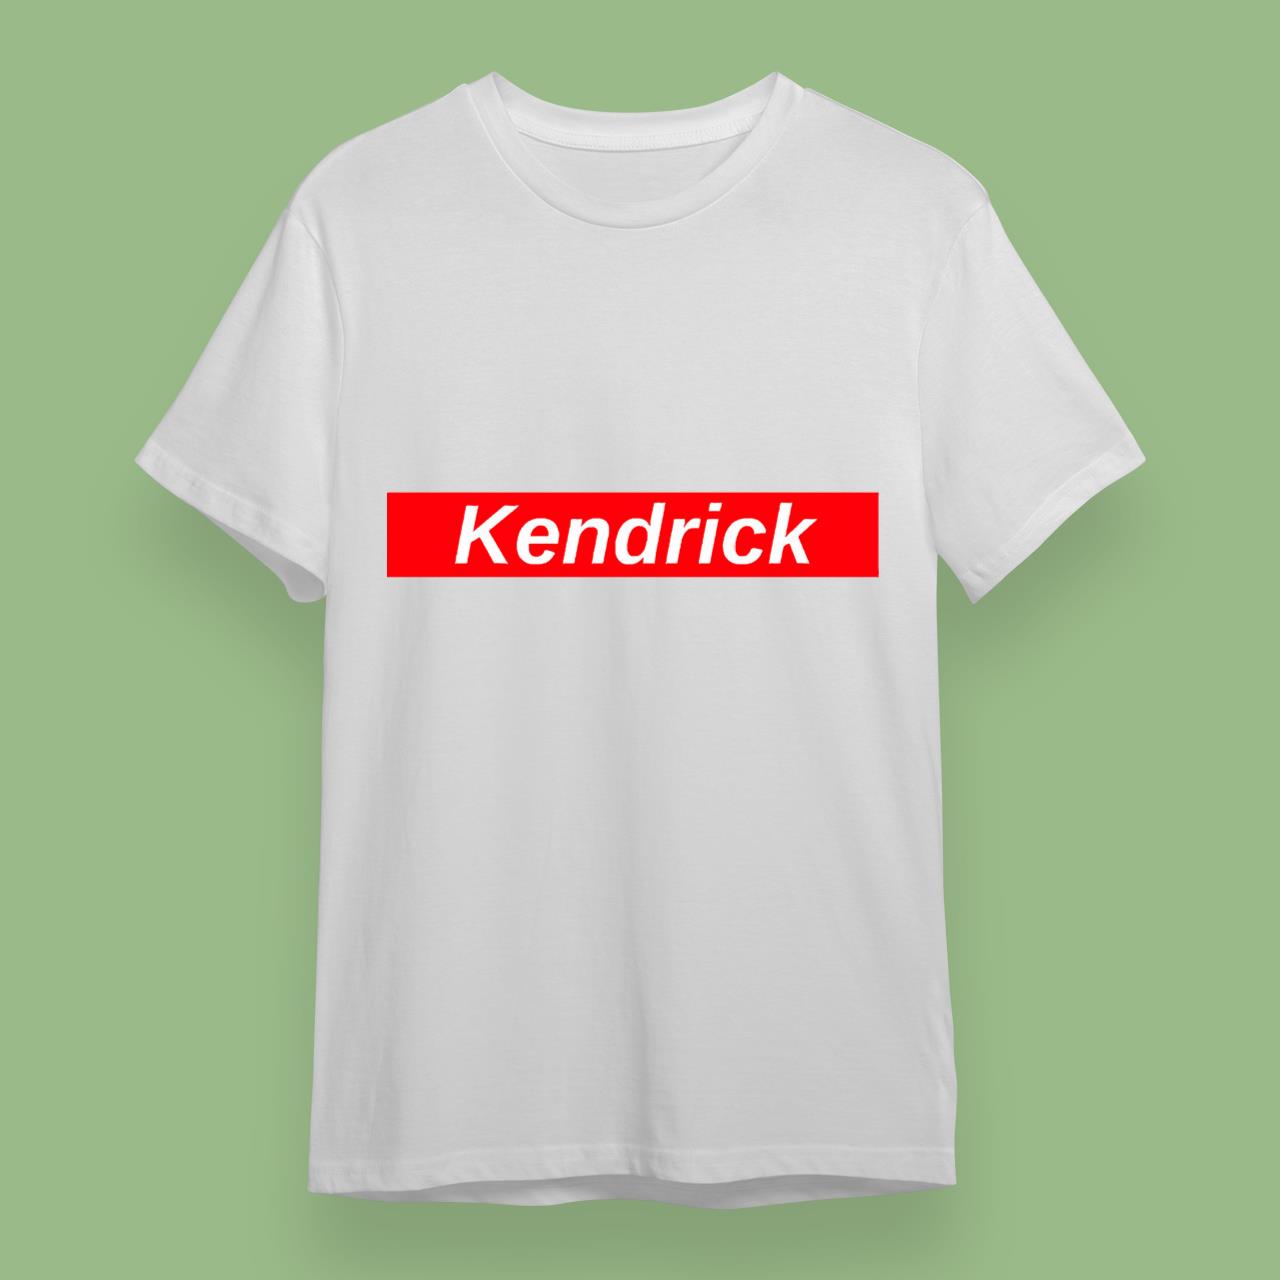 Kendrick Lamar Red Box Logo T-Shirt